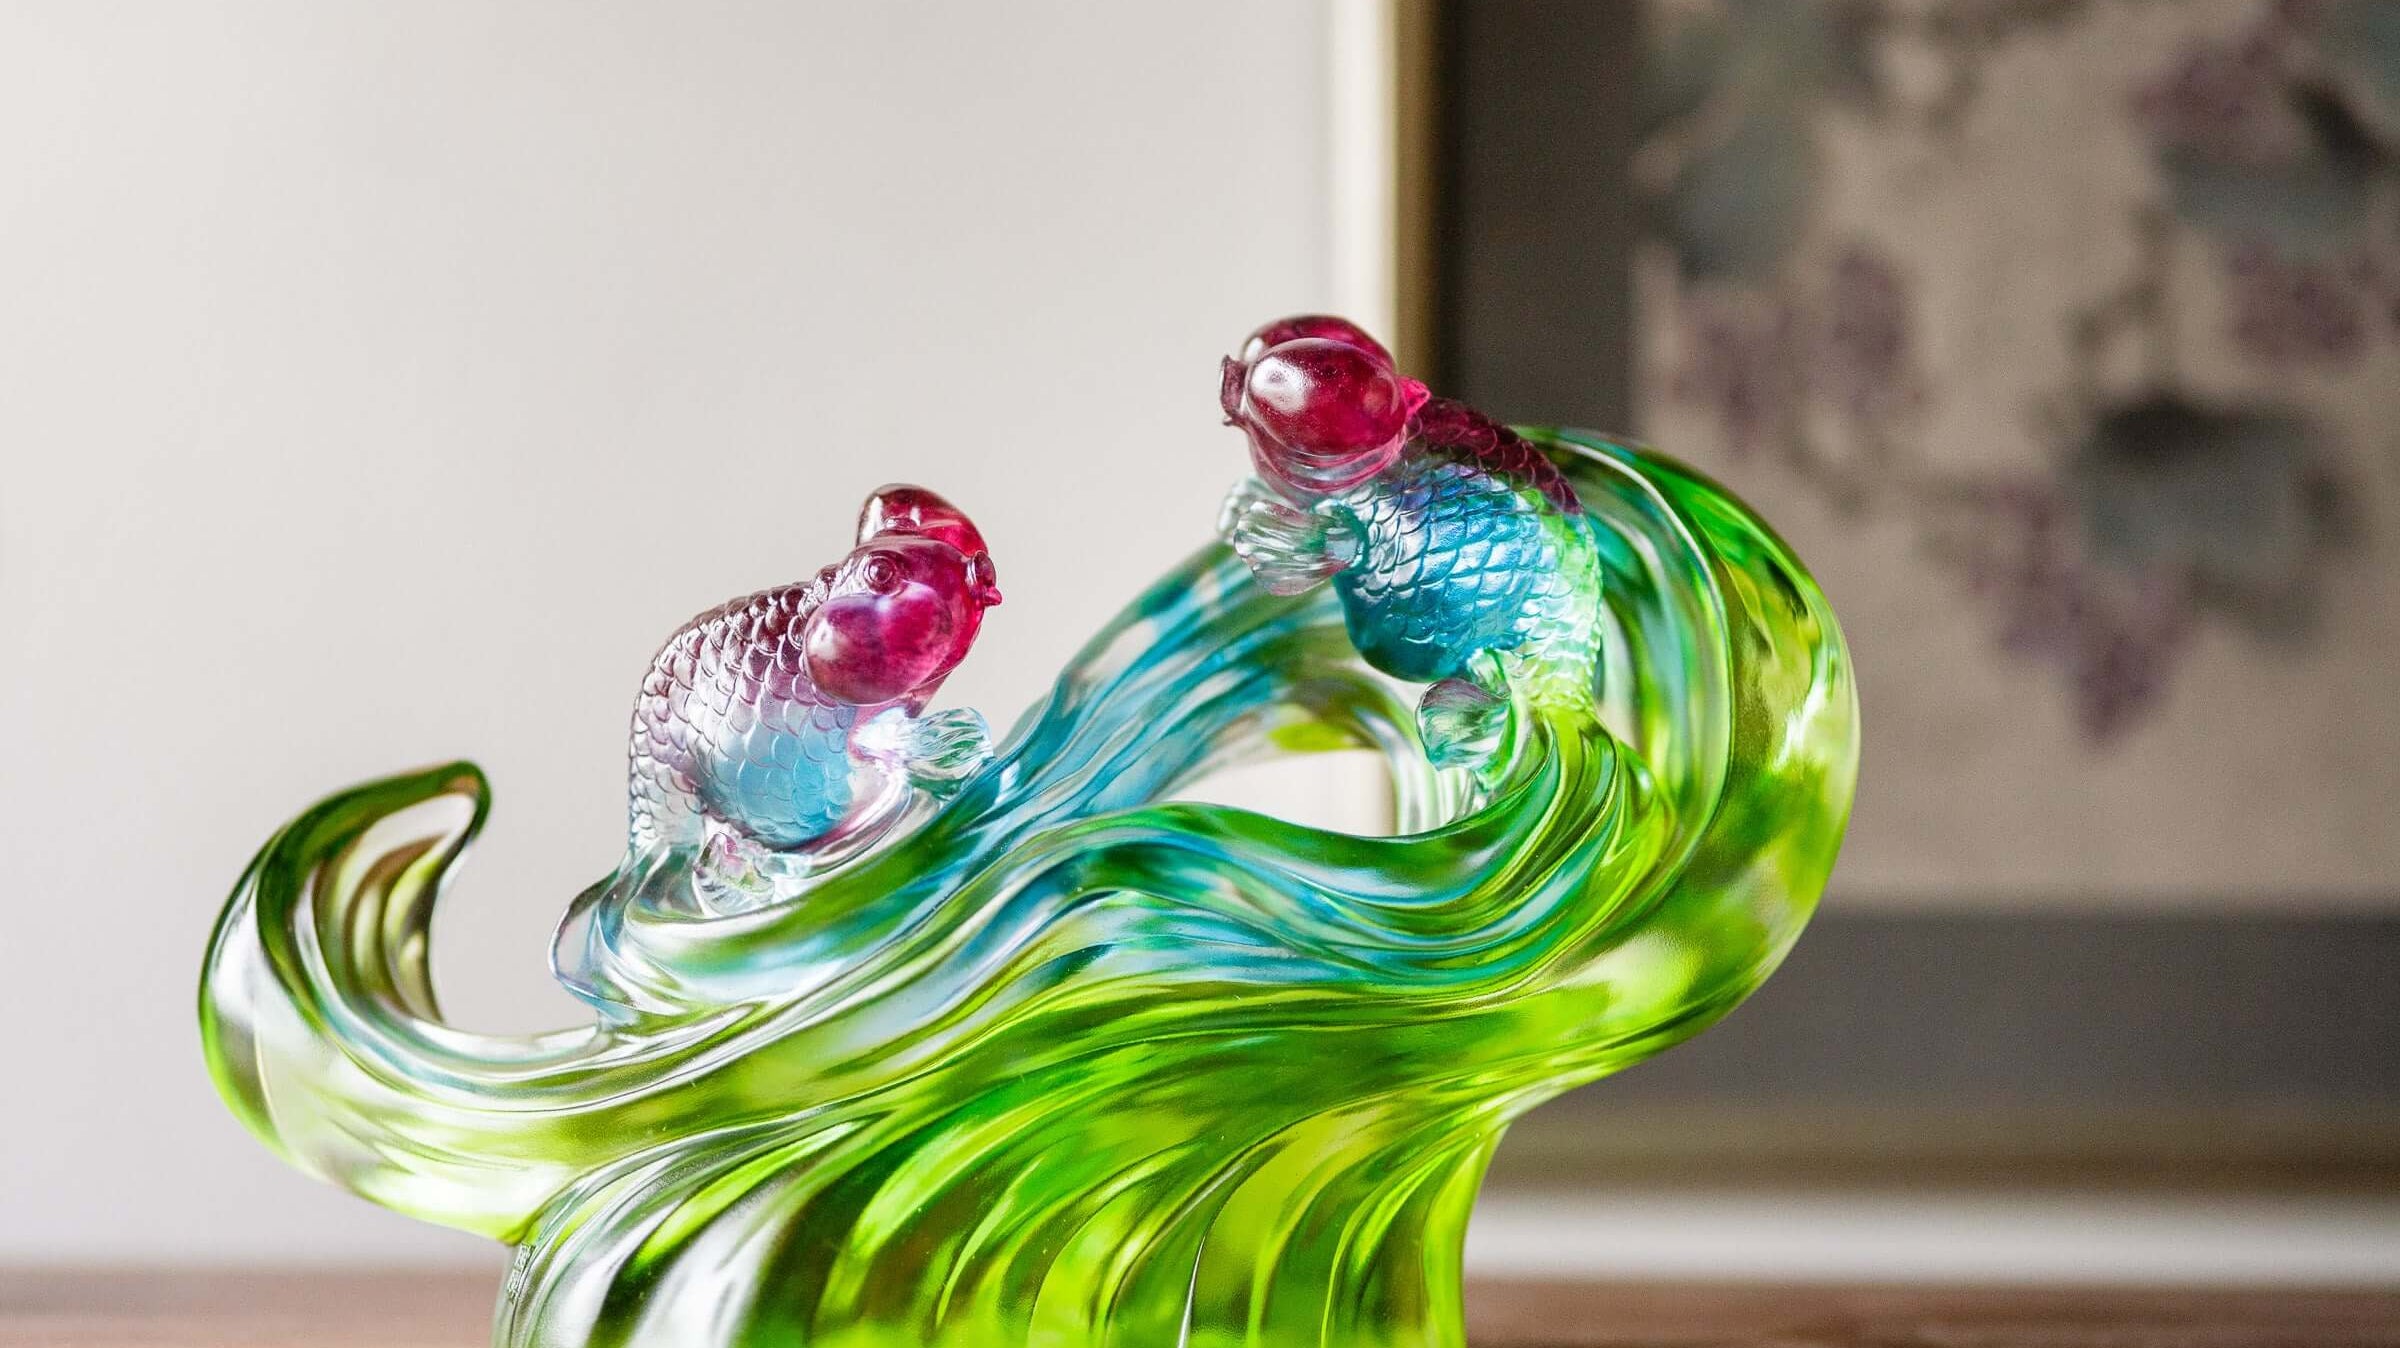 The Art of Gifting with LIULI Crystal Art